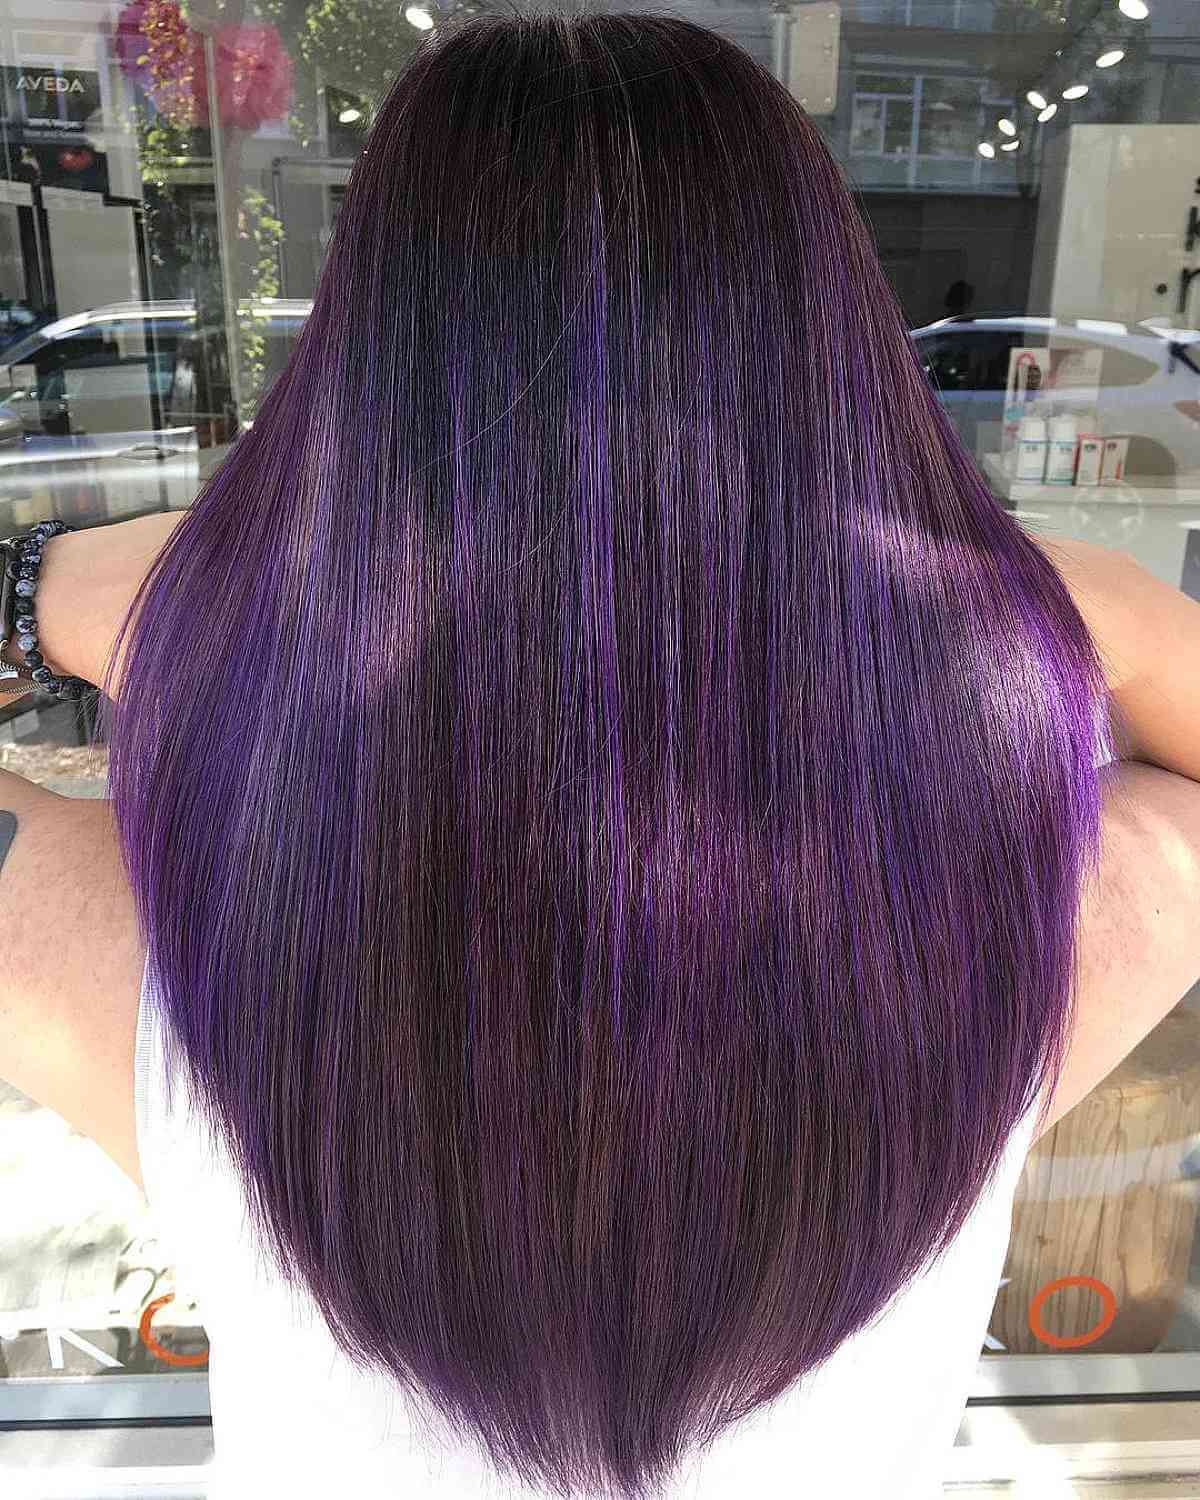 Dark V-Cut Hair with Purple Highlights